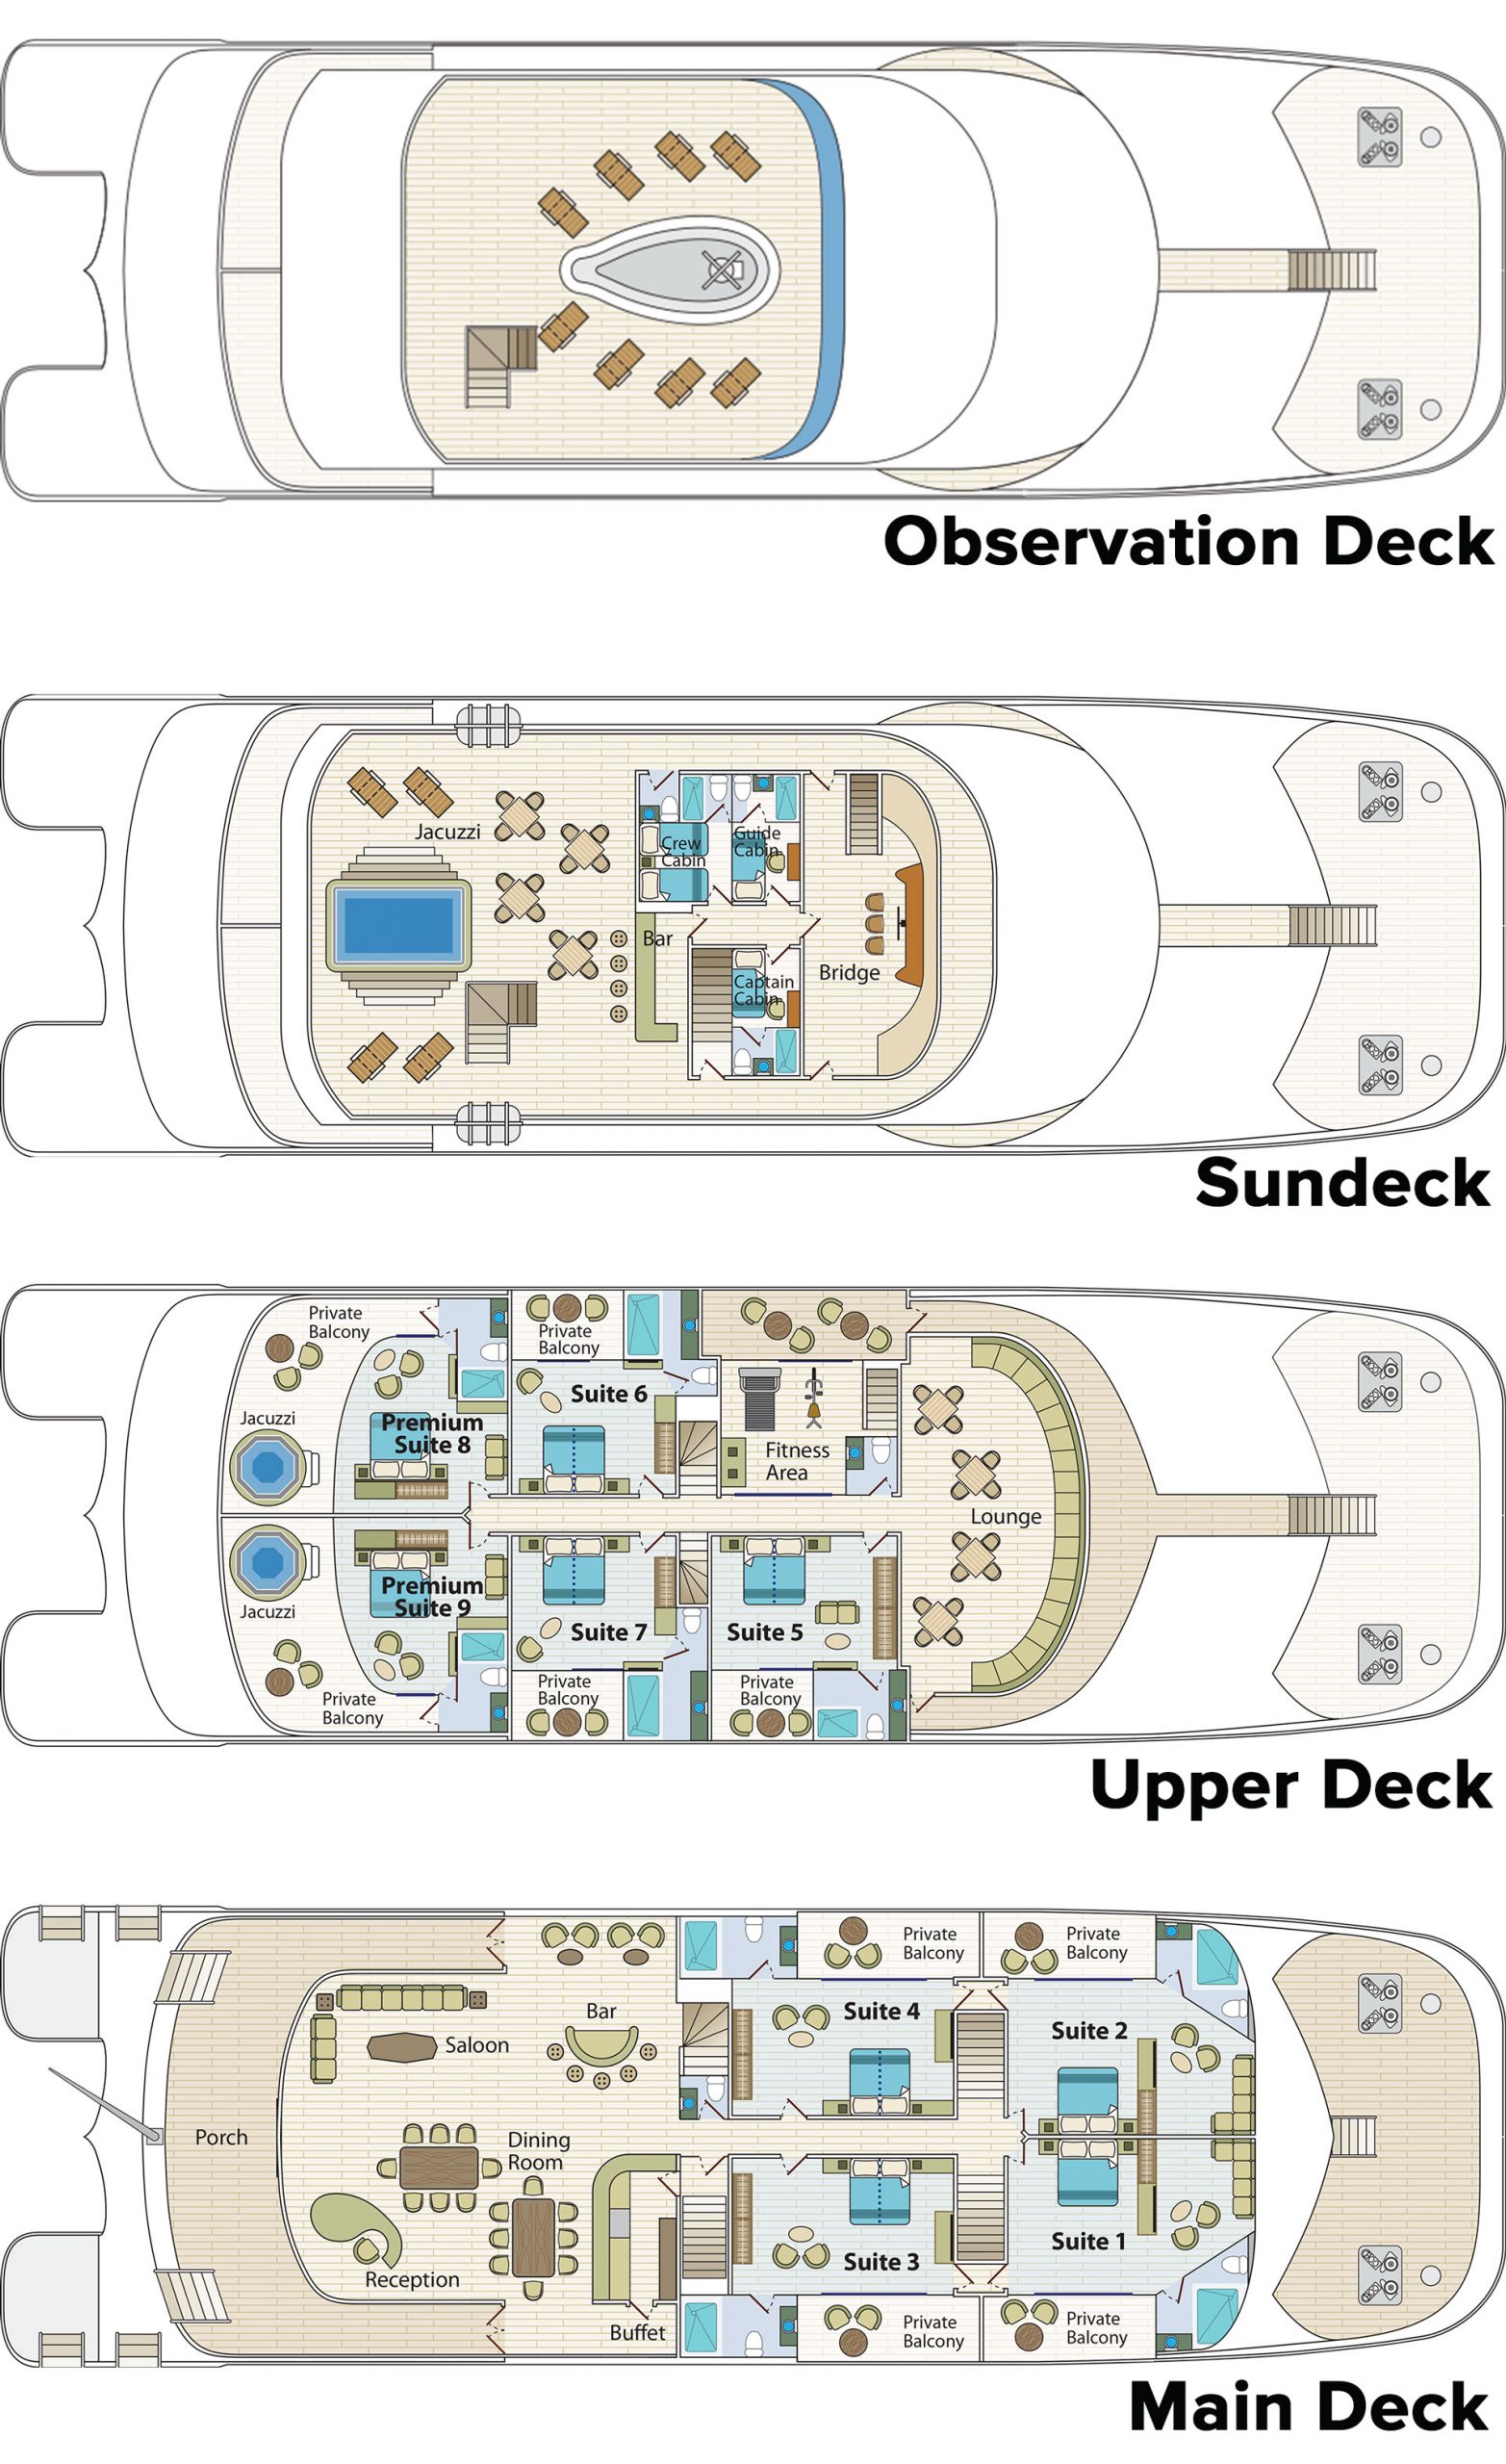 Deck plan of Cormorant II luxury Galapagos catamaran with 4 public decks, Jacuzzi, 2 bars, 9 suites, fitness area & more.